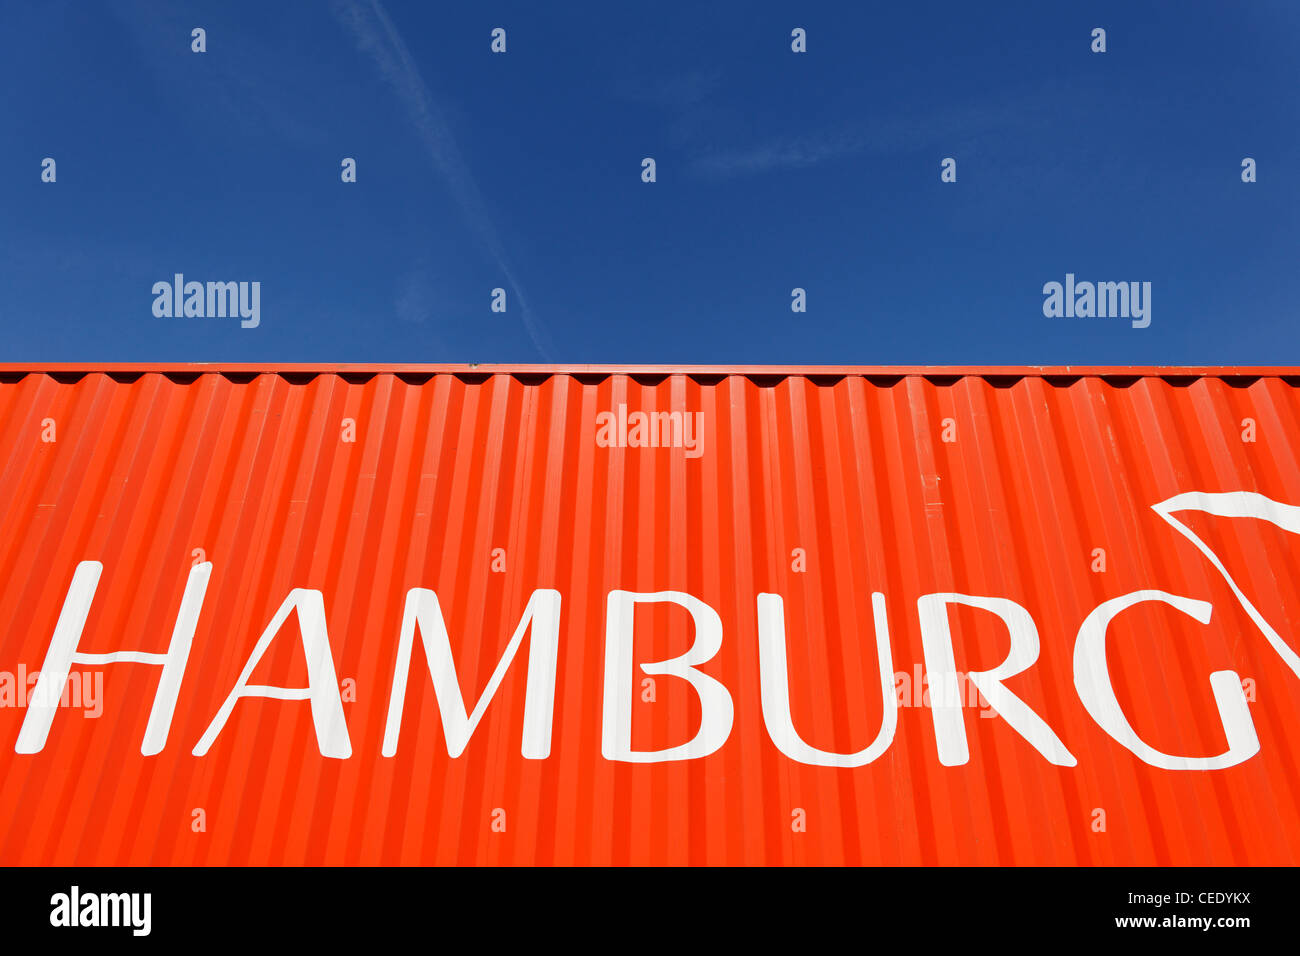 Container mit Hamburg Sued-logo Stockfoto